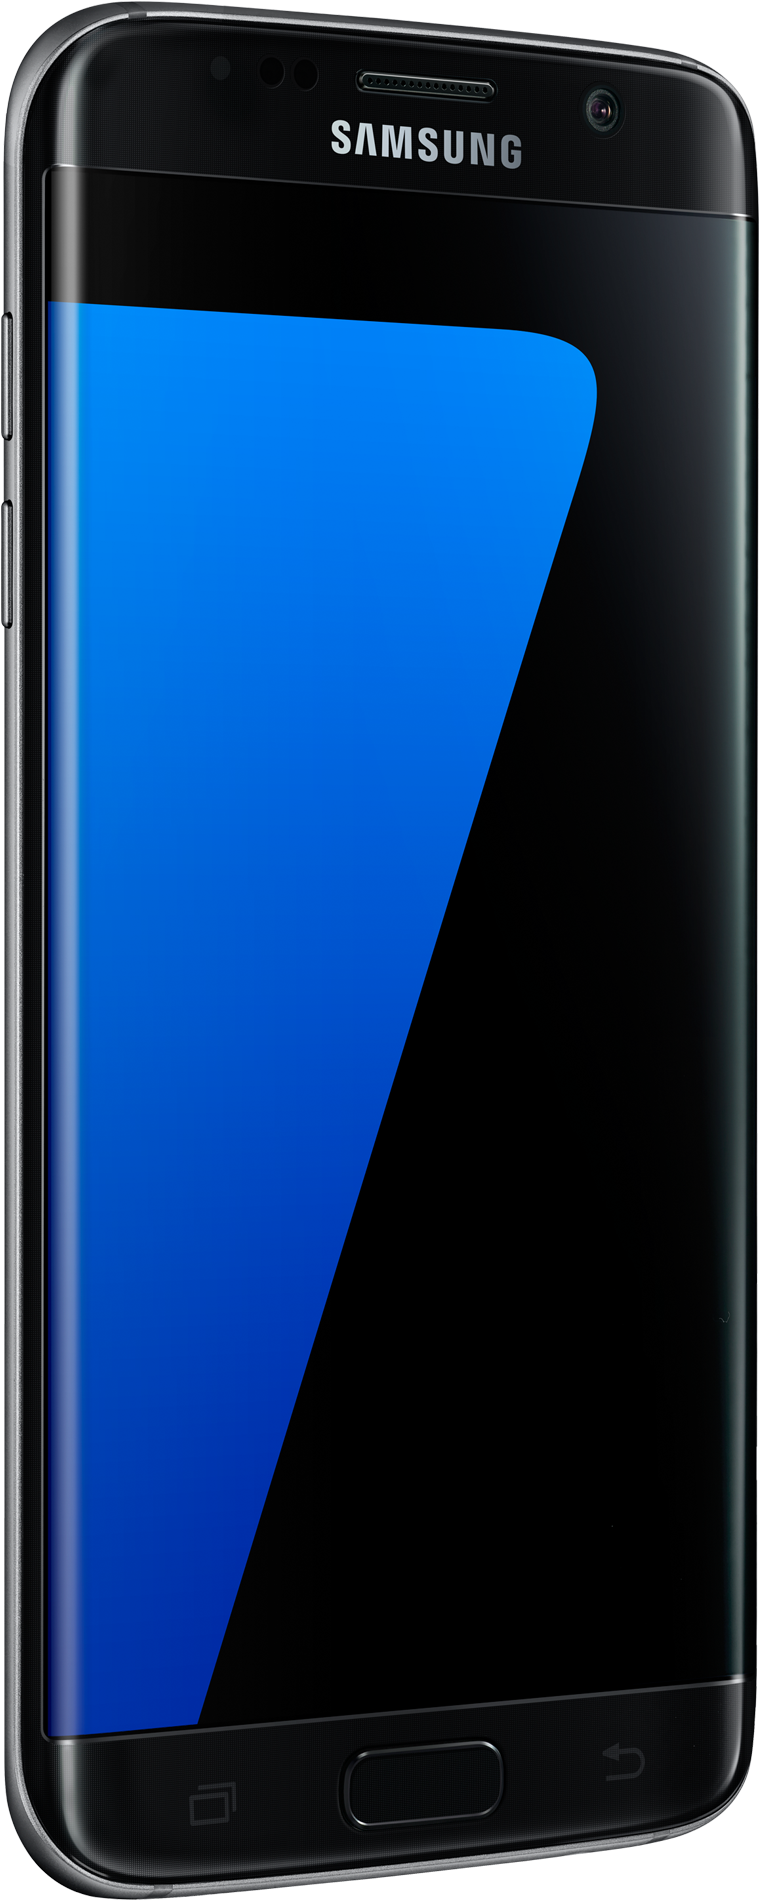 Samsung Edge Smartphone Display PNG image